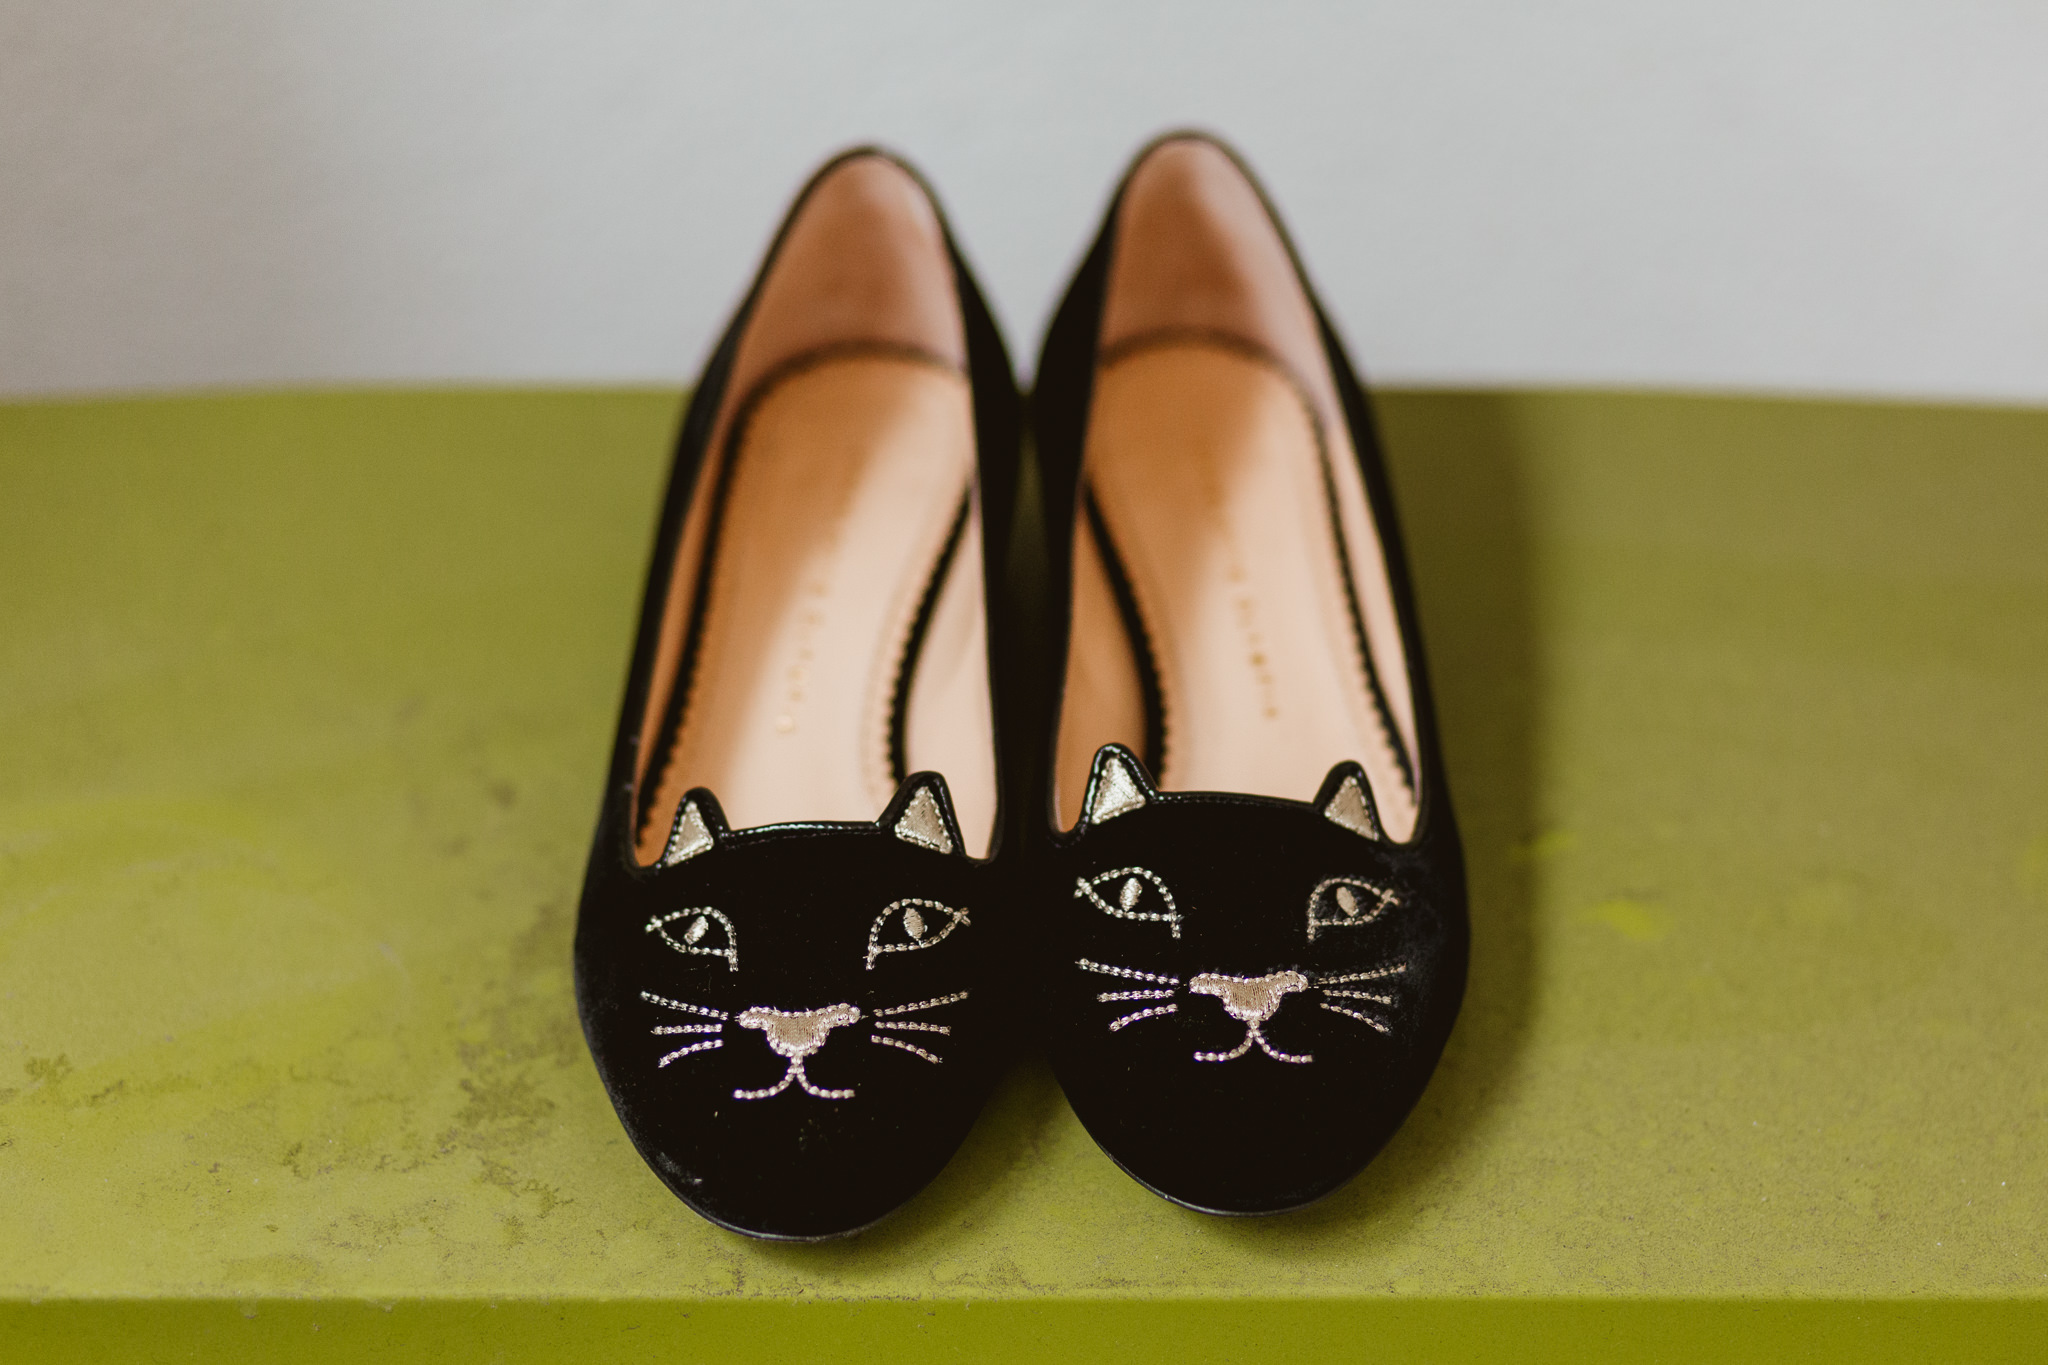 Cute cat shoes, London wedding